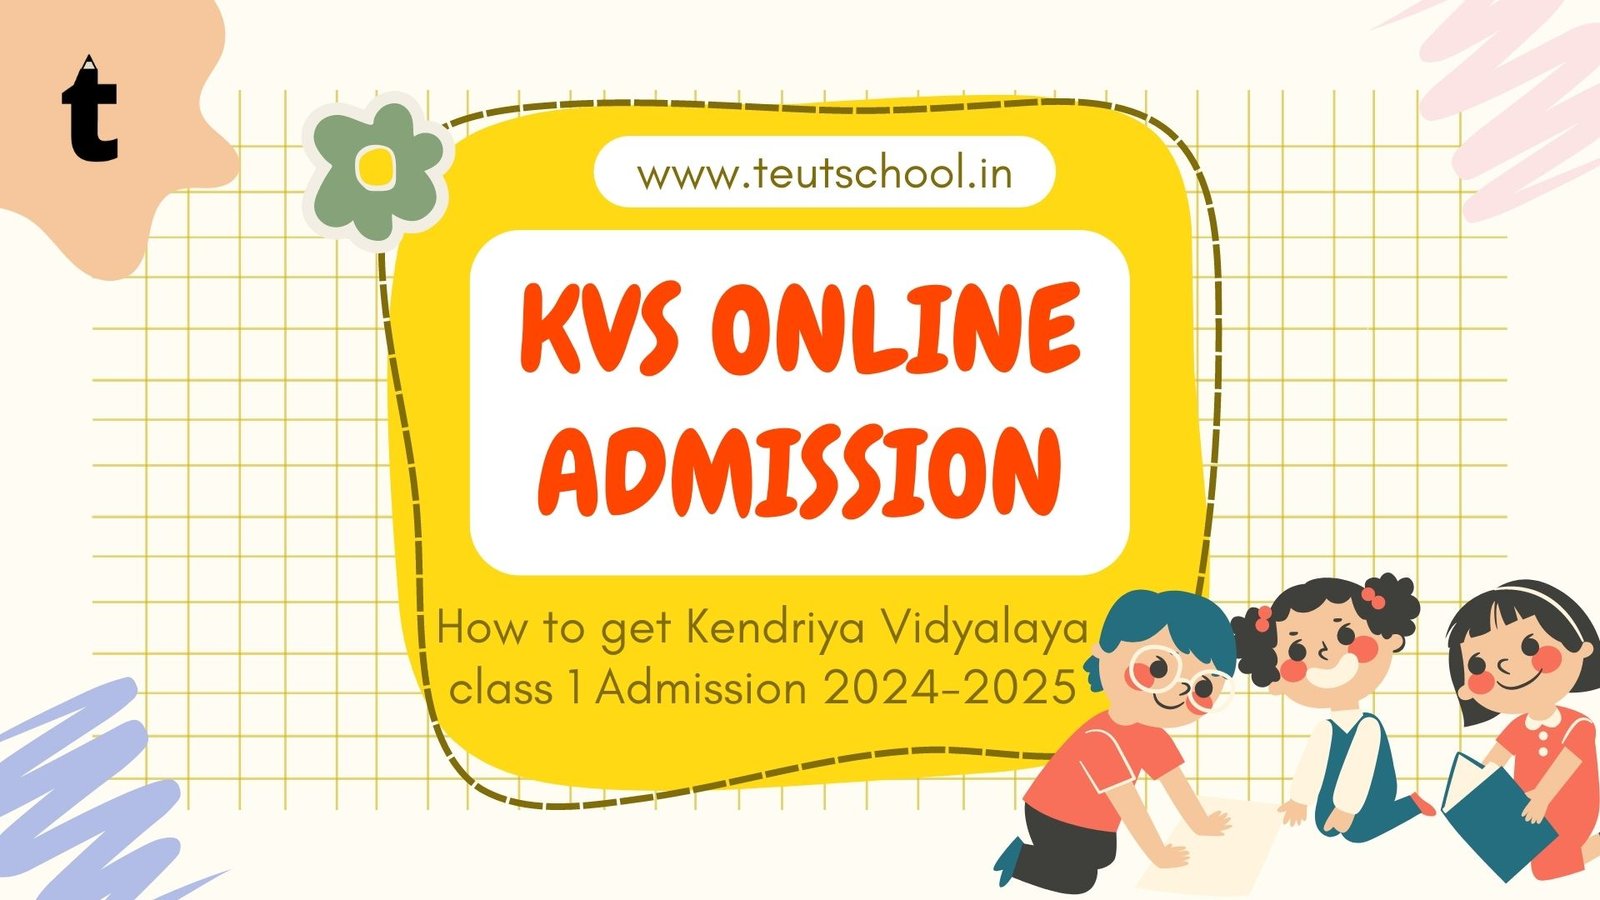 Kendriya Vidyalaya School Class 1 Admission 2024-2025